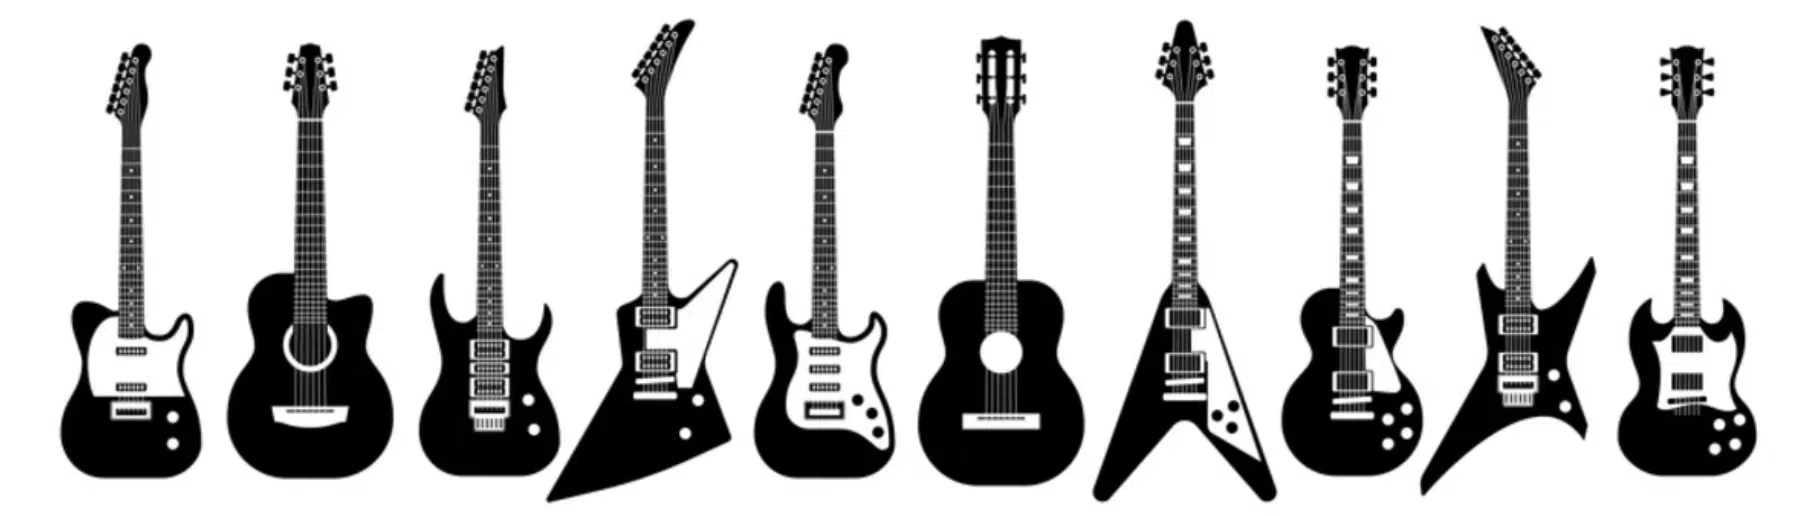 Electric Guitars - Unison